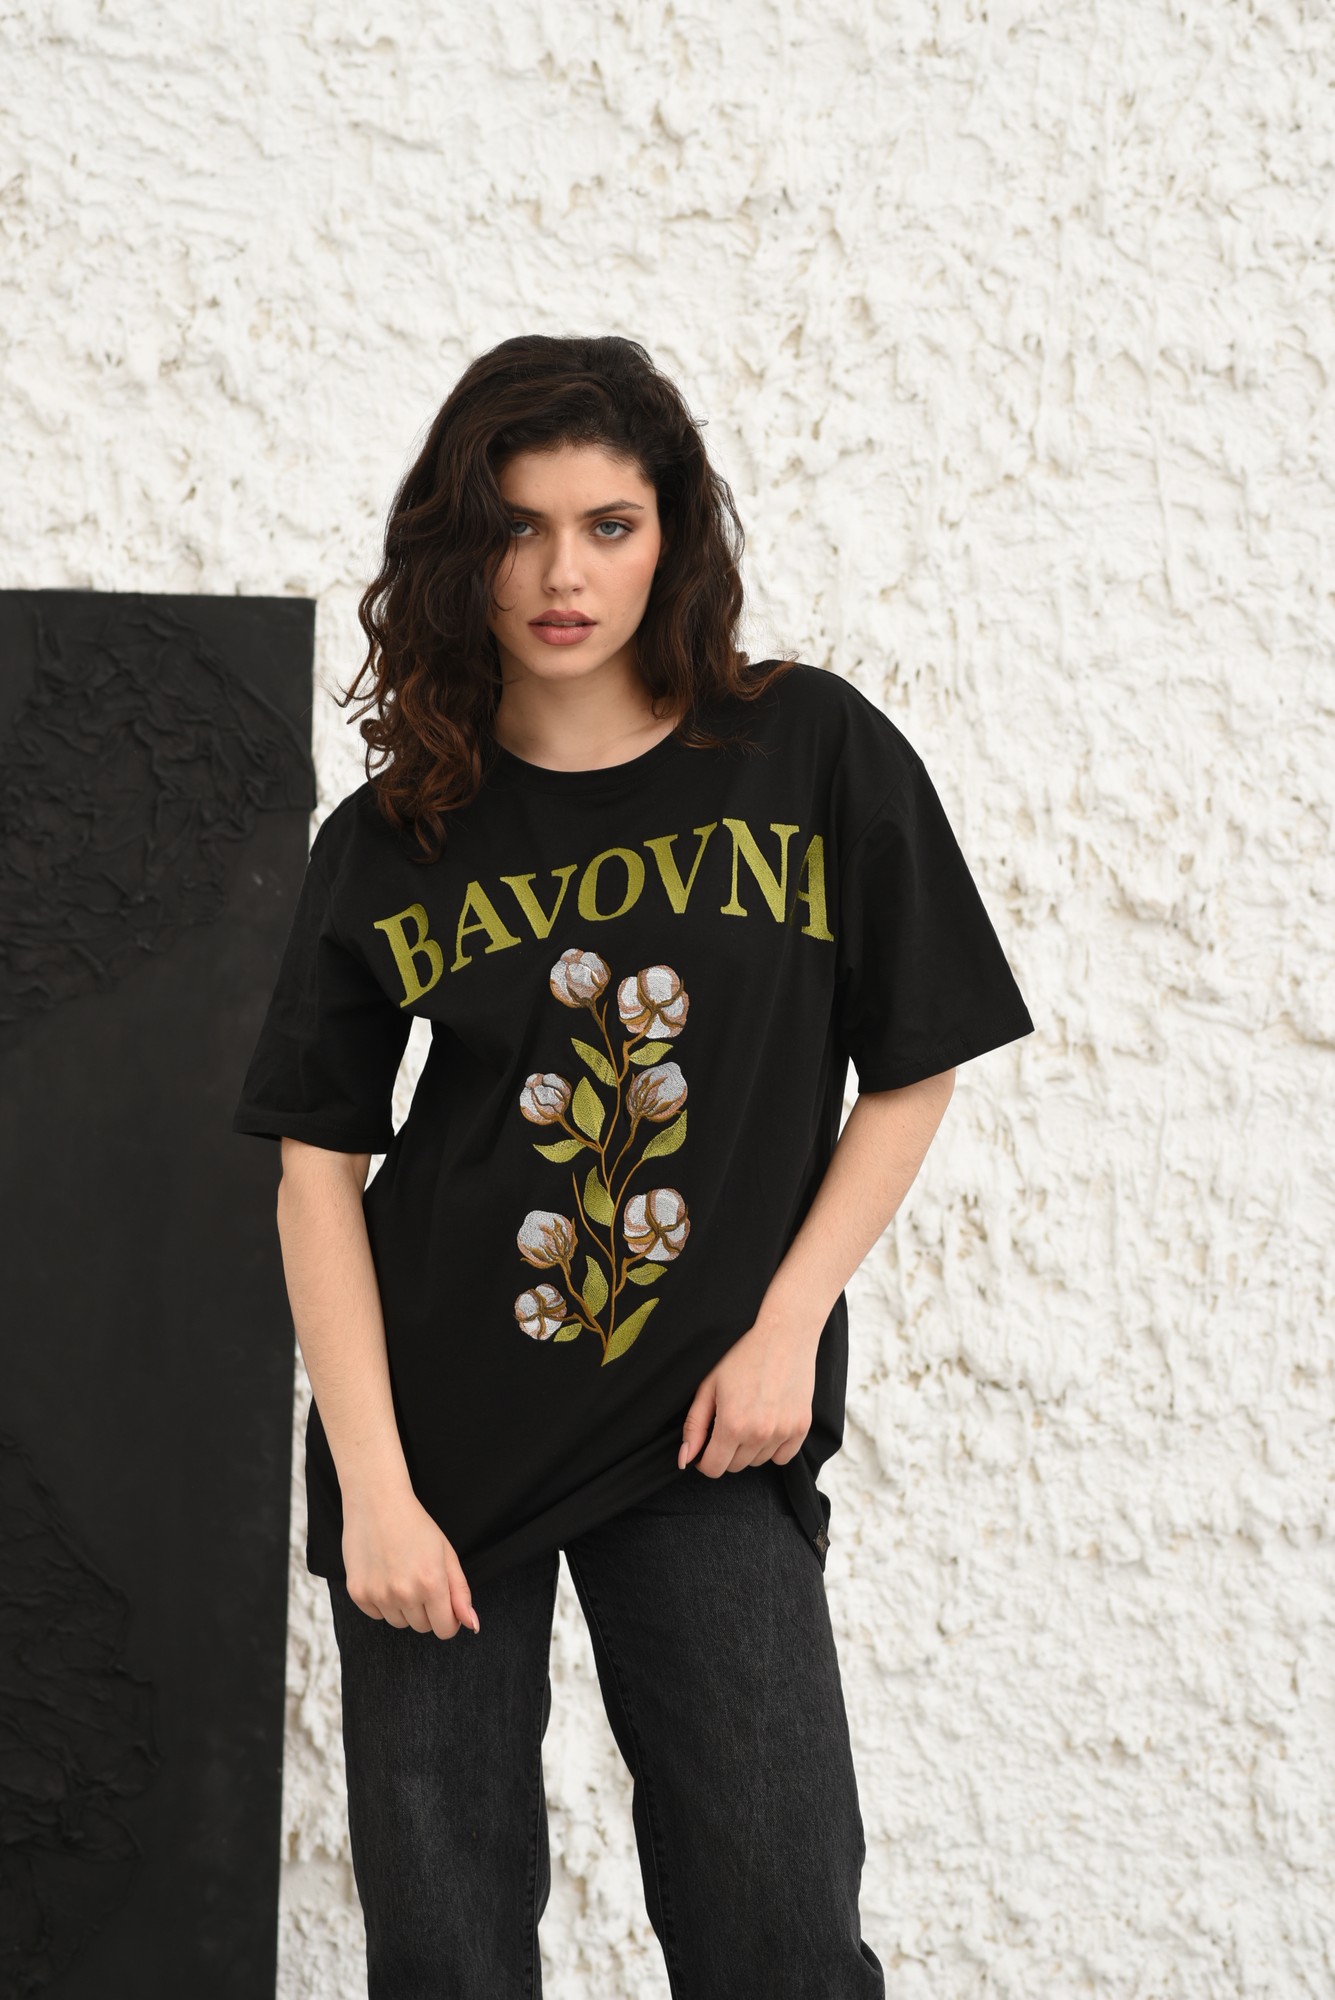 Embroidered T-Shirt "Bavovna"